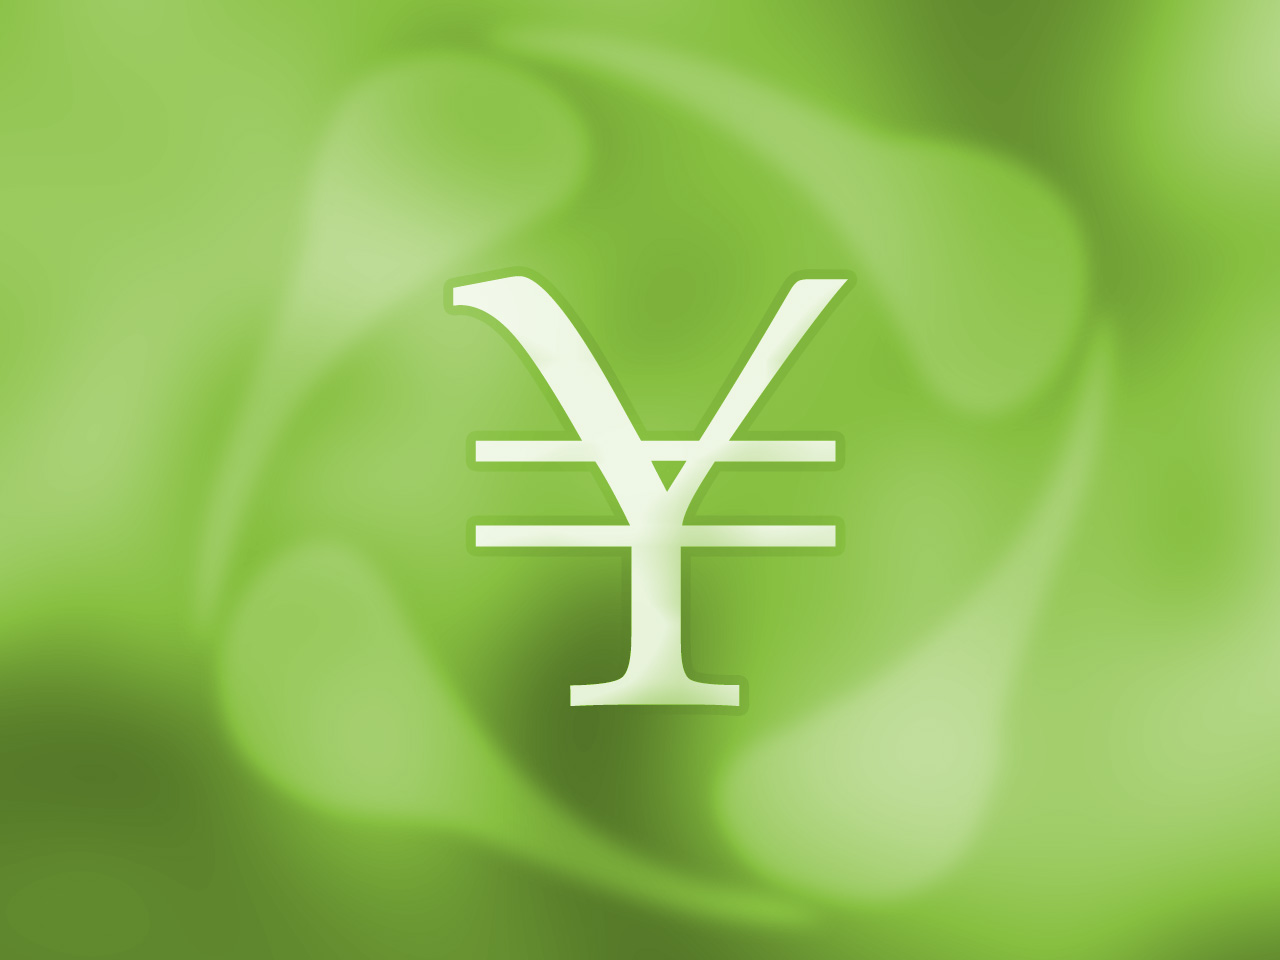 Yen currency symbol